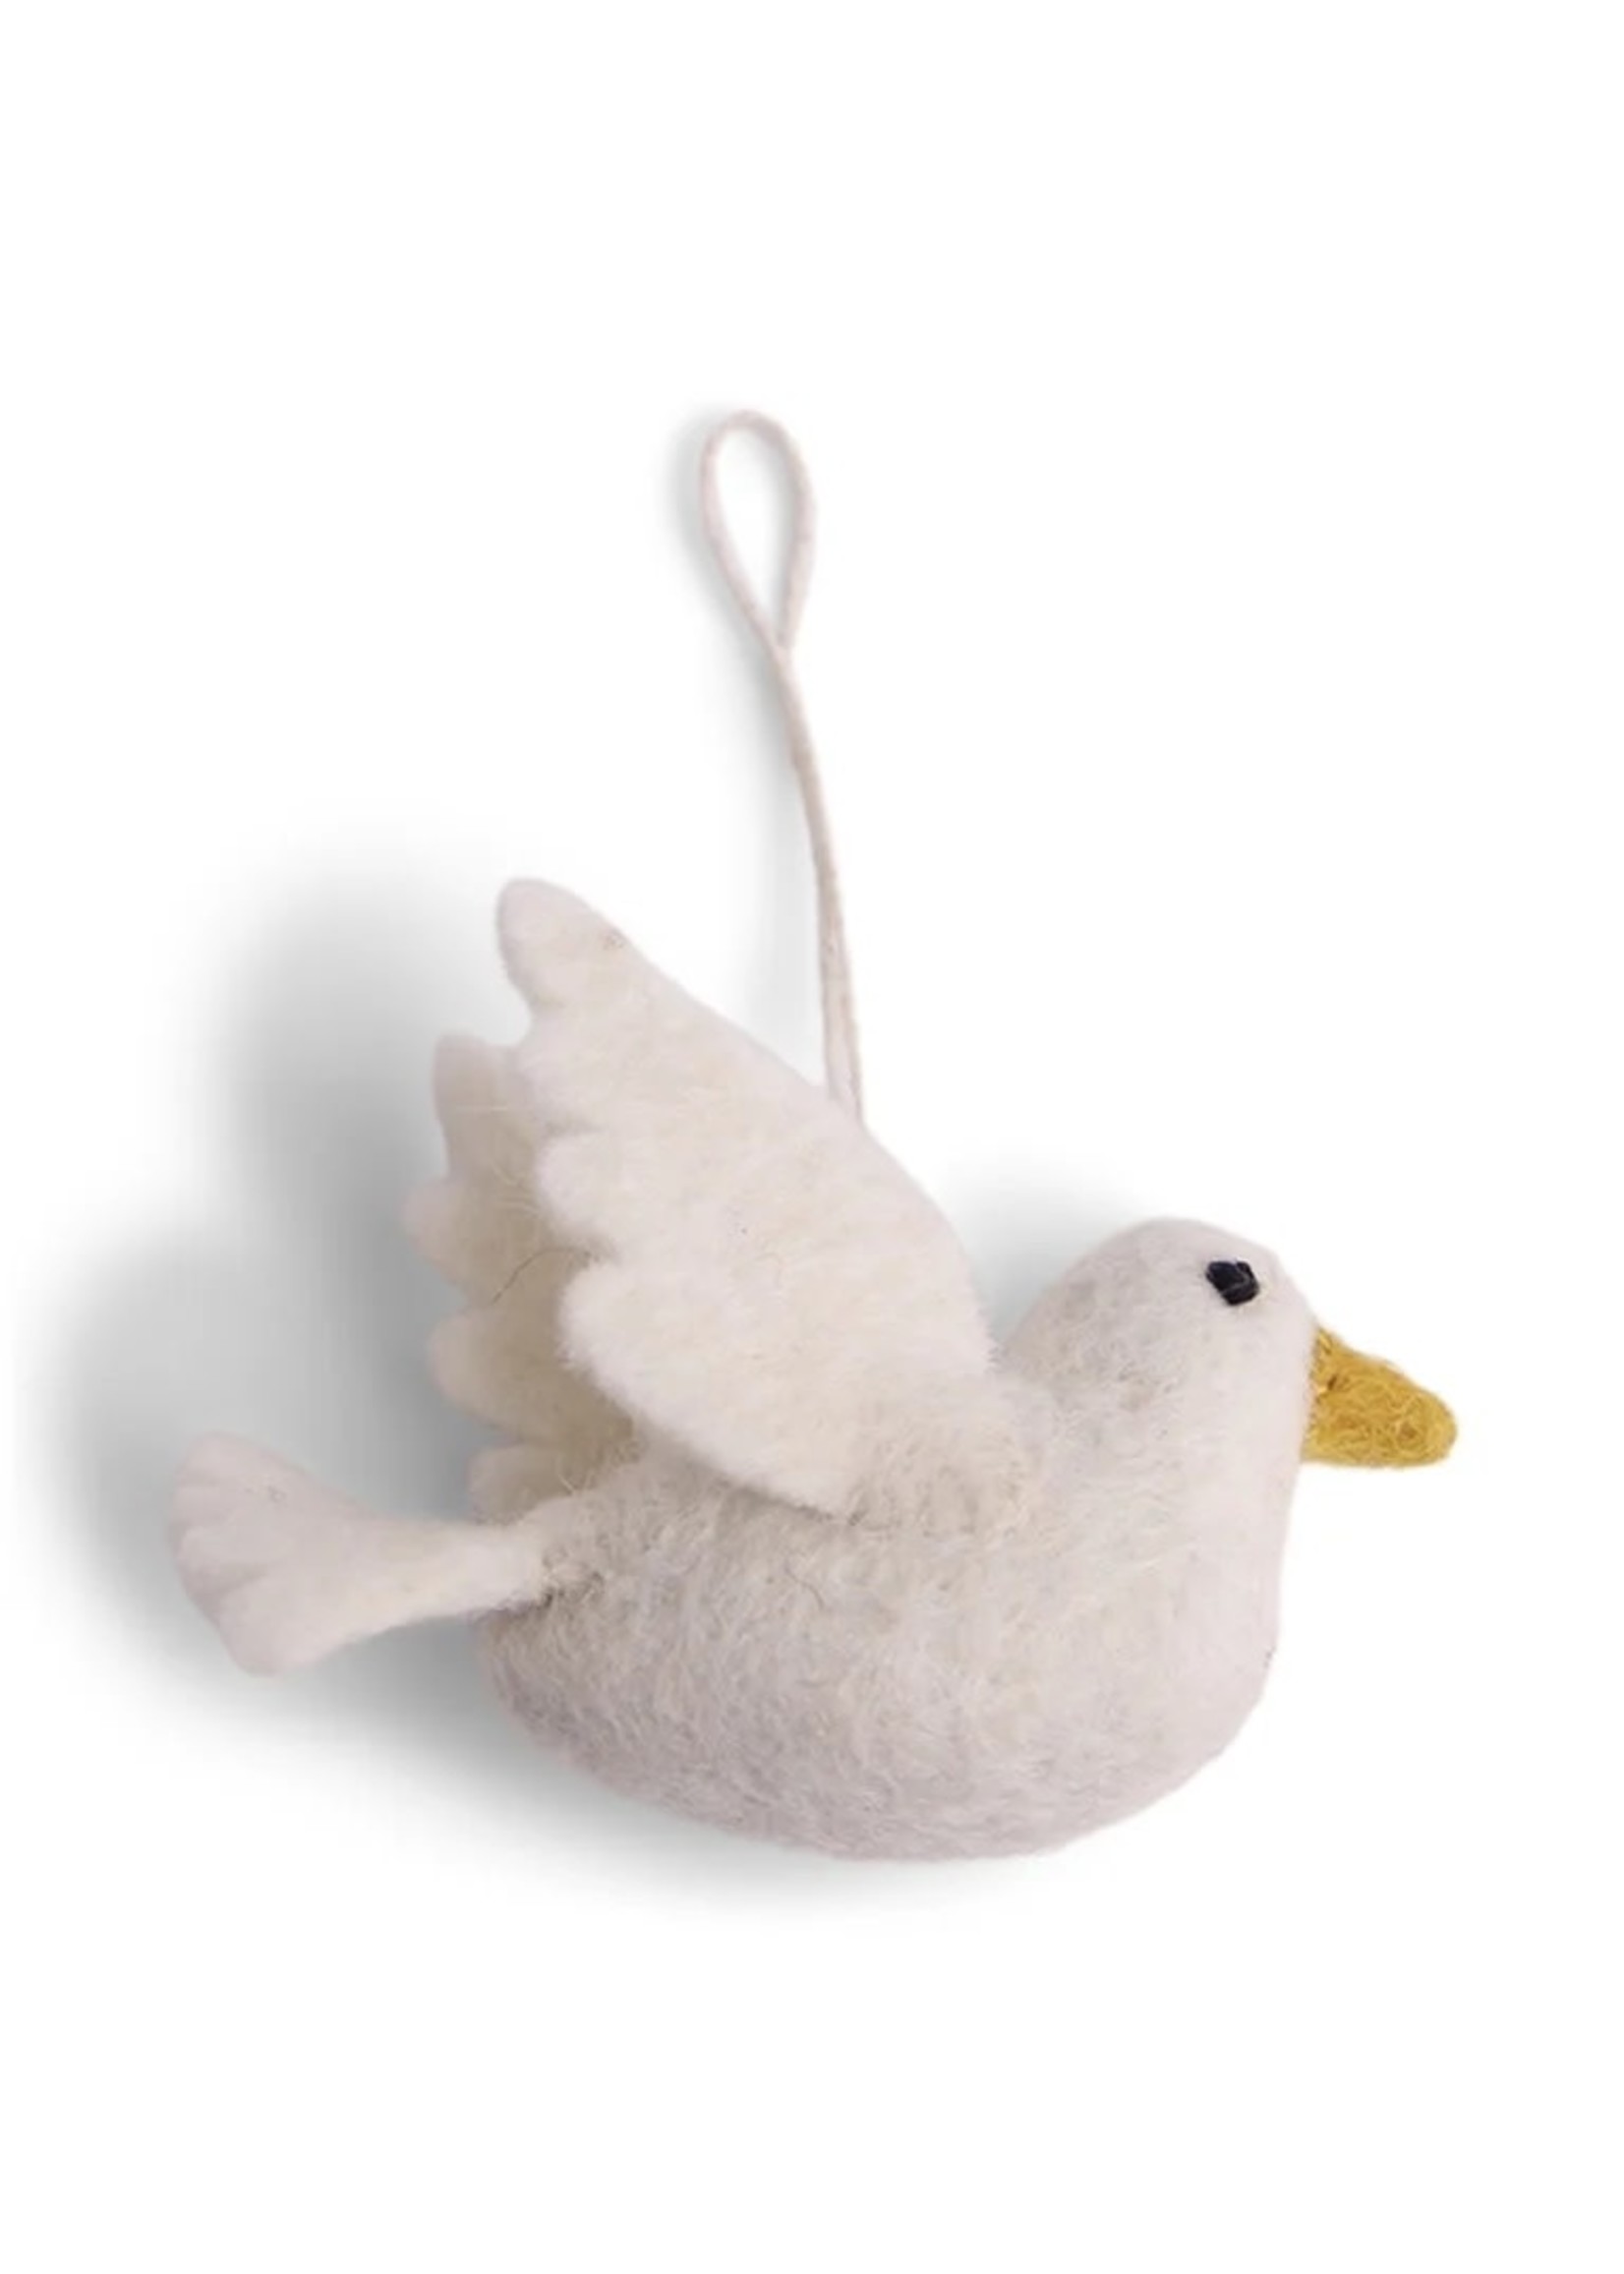 Ornament - Peace Dove - Set of 2